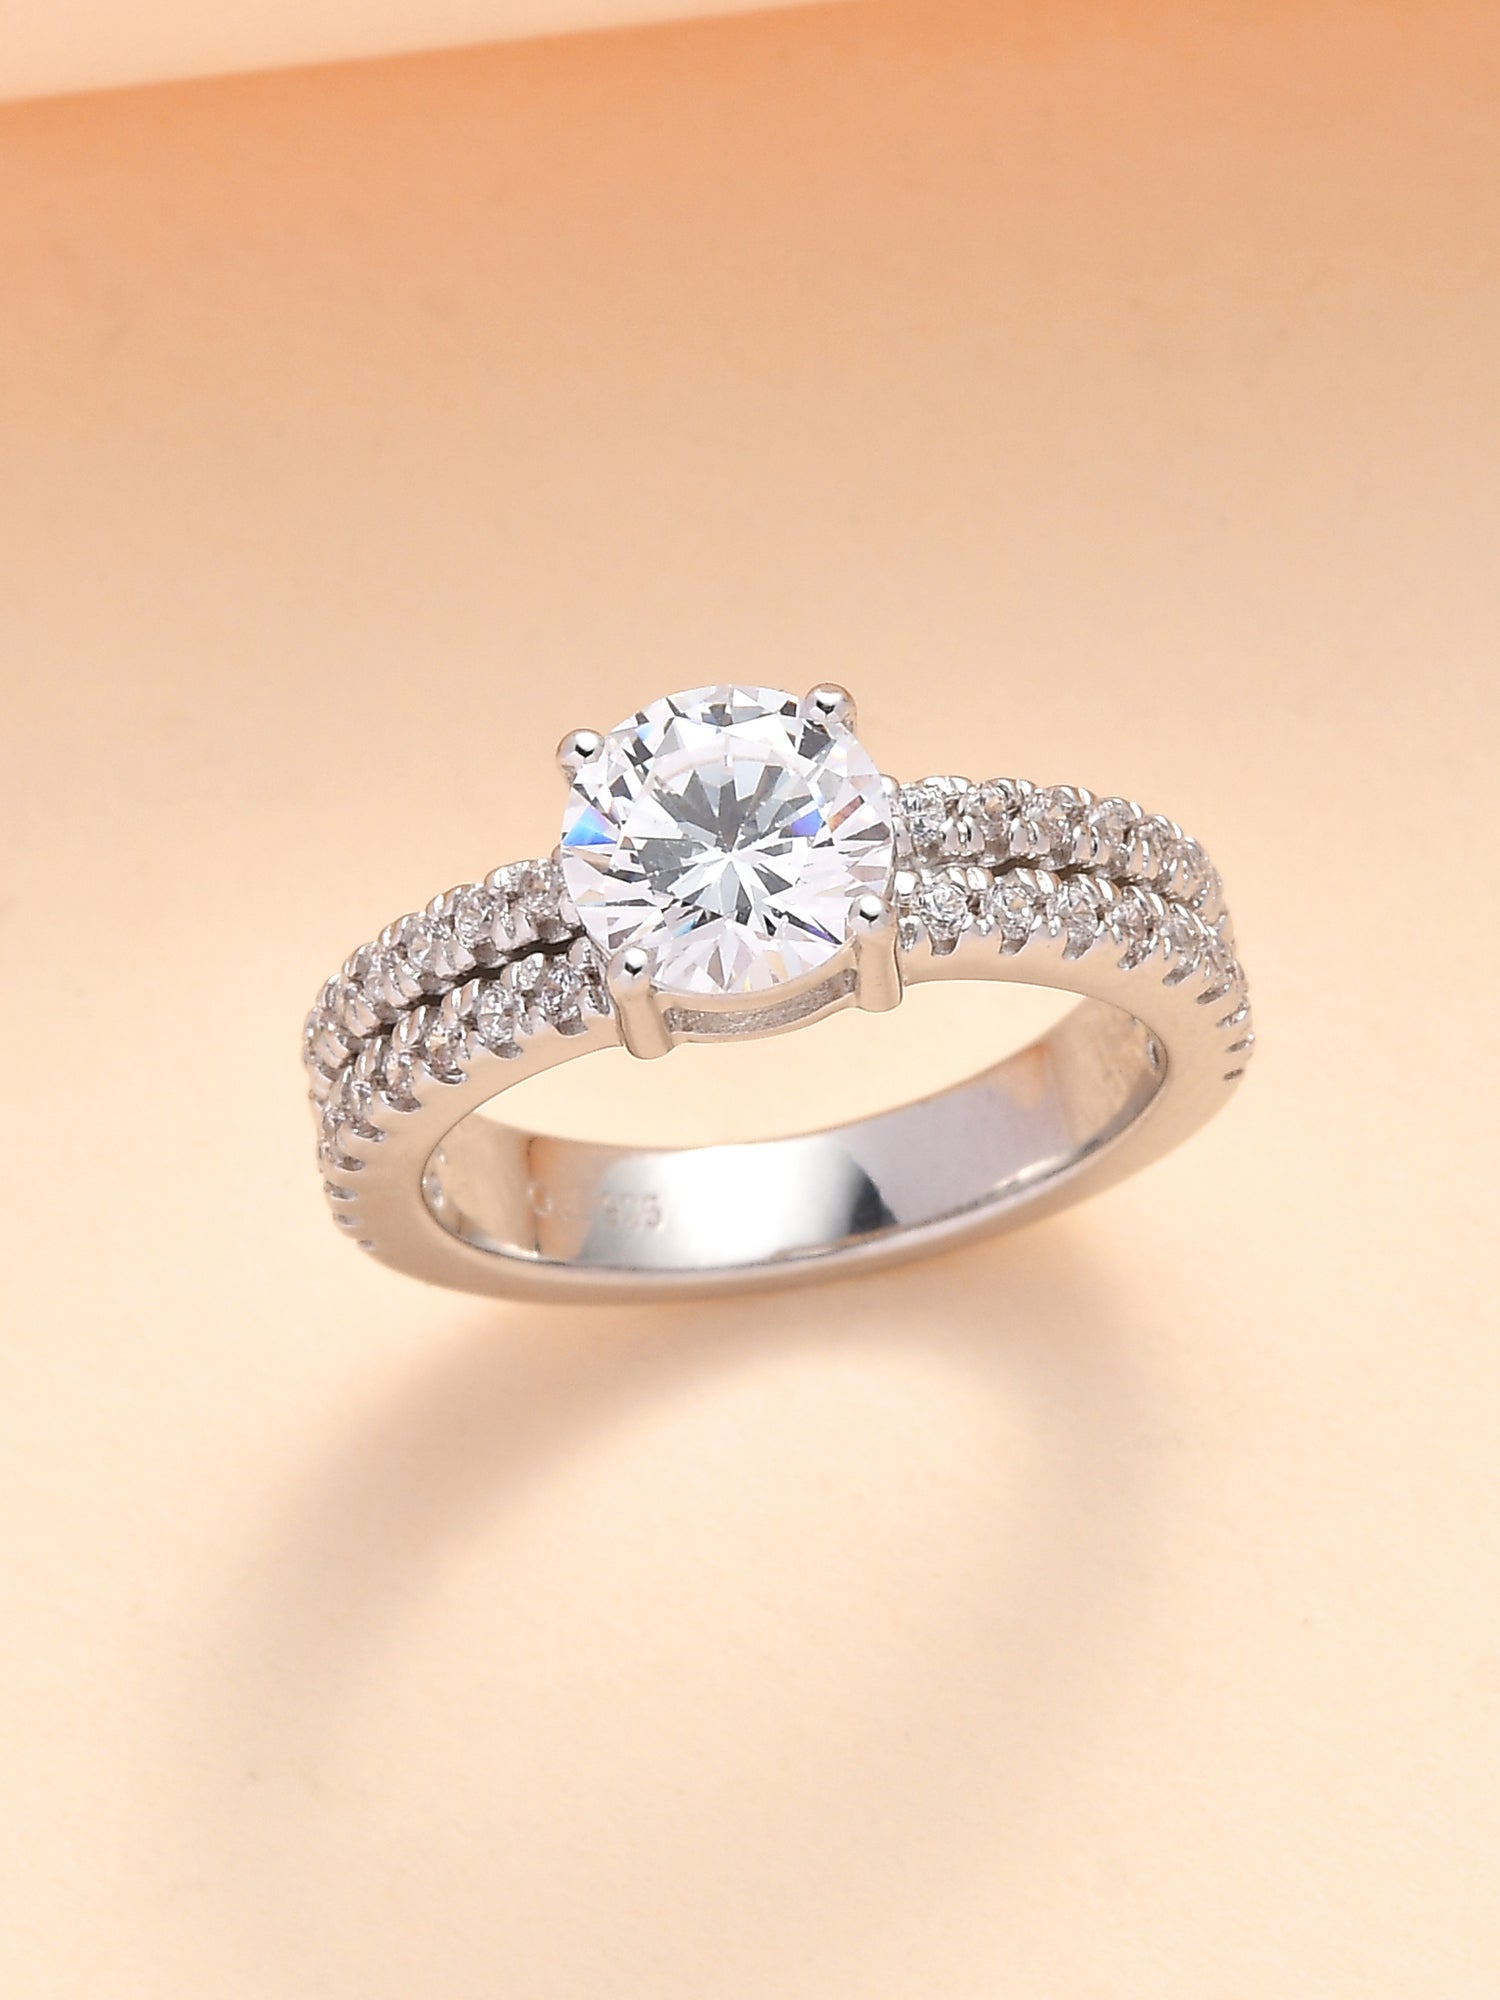 1.5 Carat American Diamond Engagement Solitaire Ring